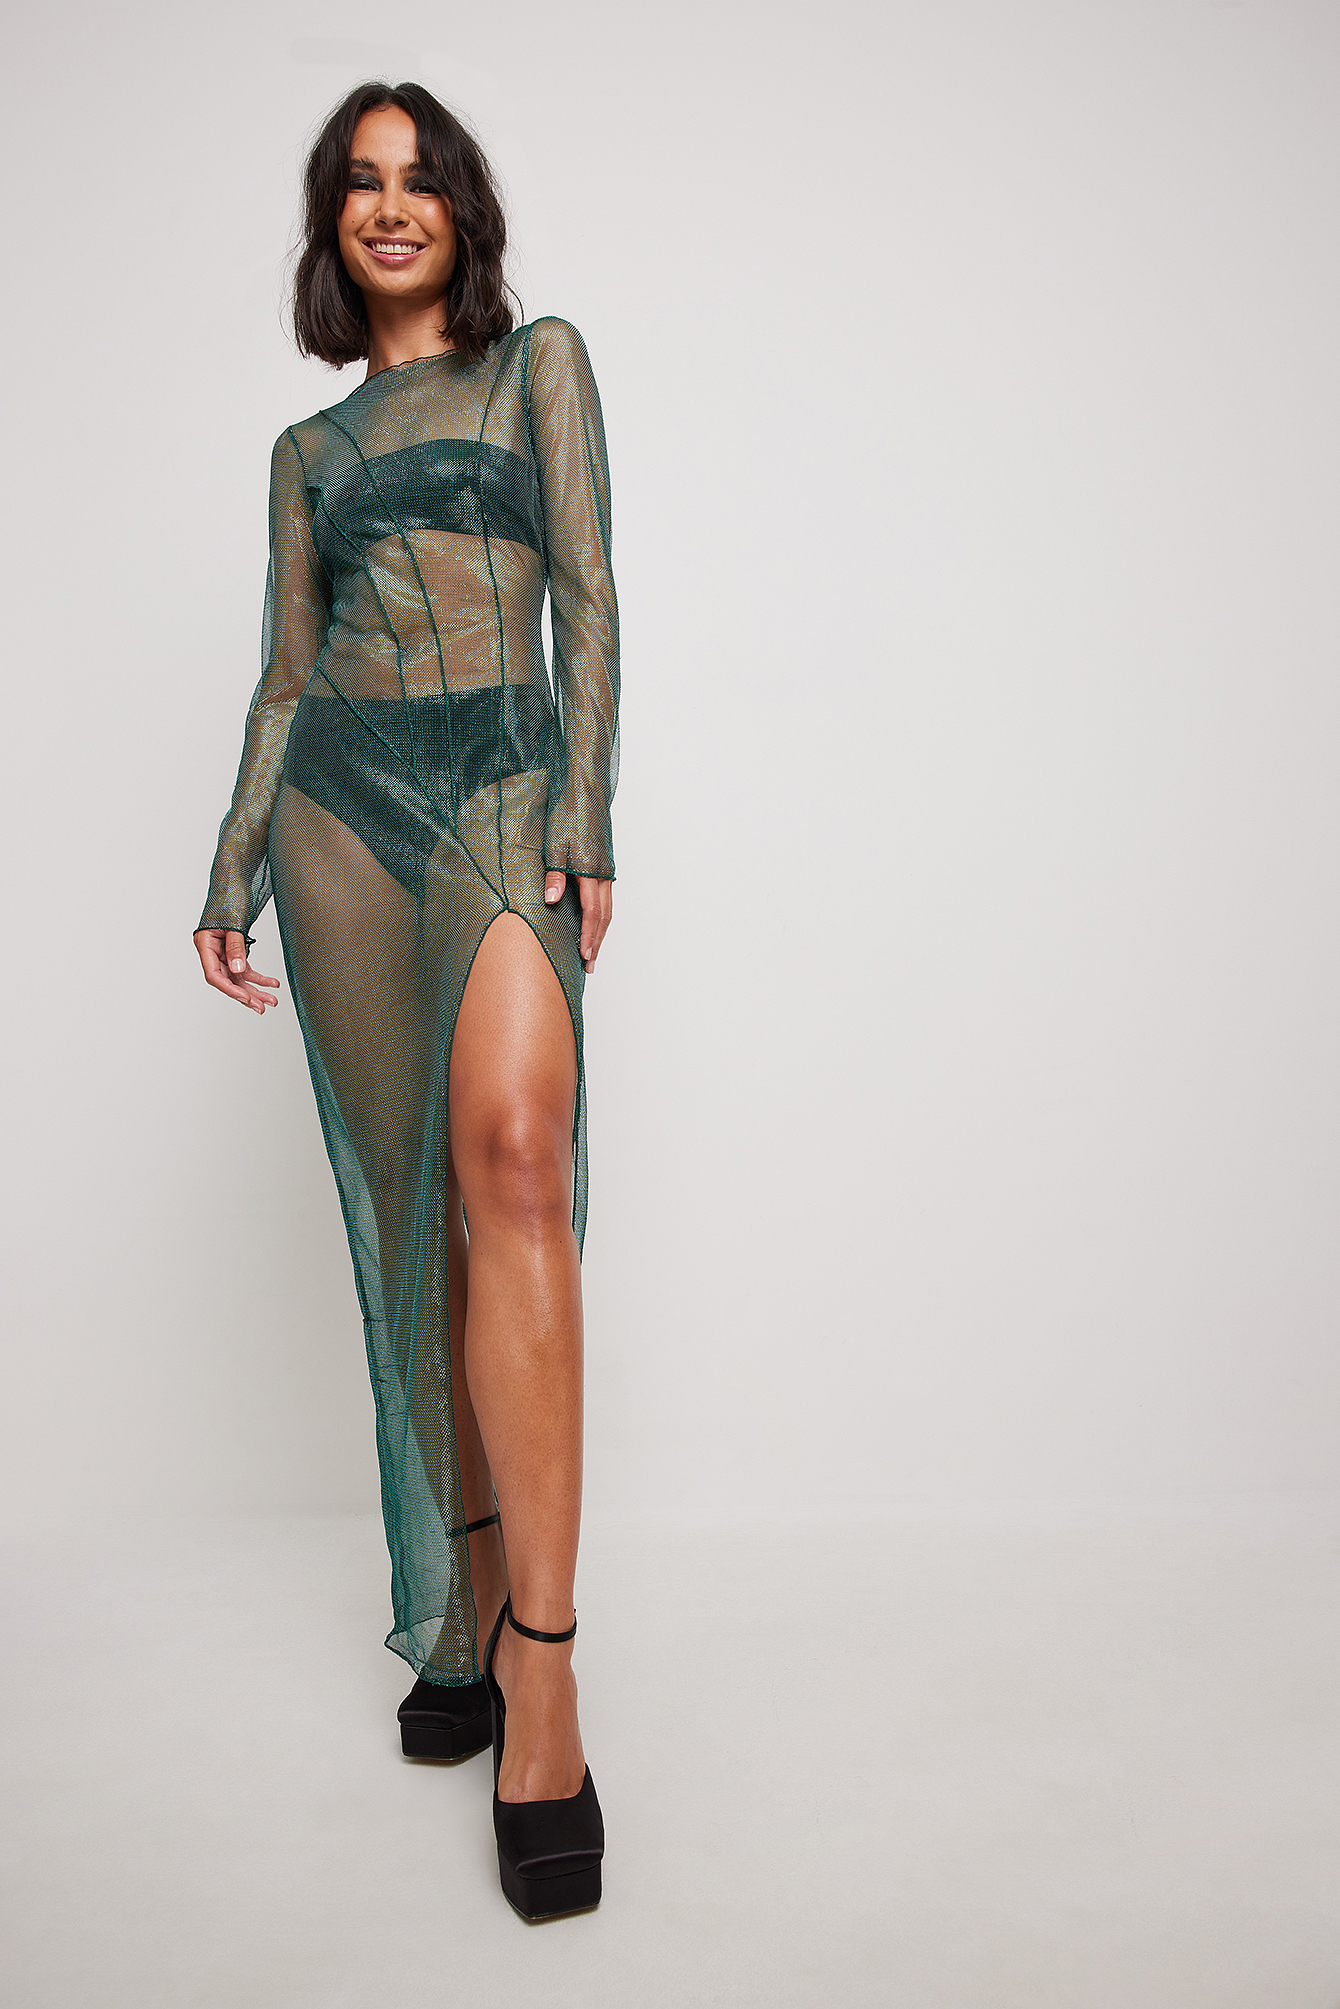 Net Fabric High Slit Maxi Dress Outfit